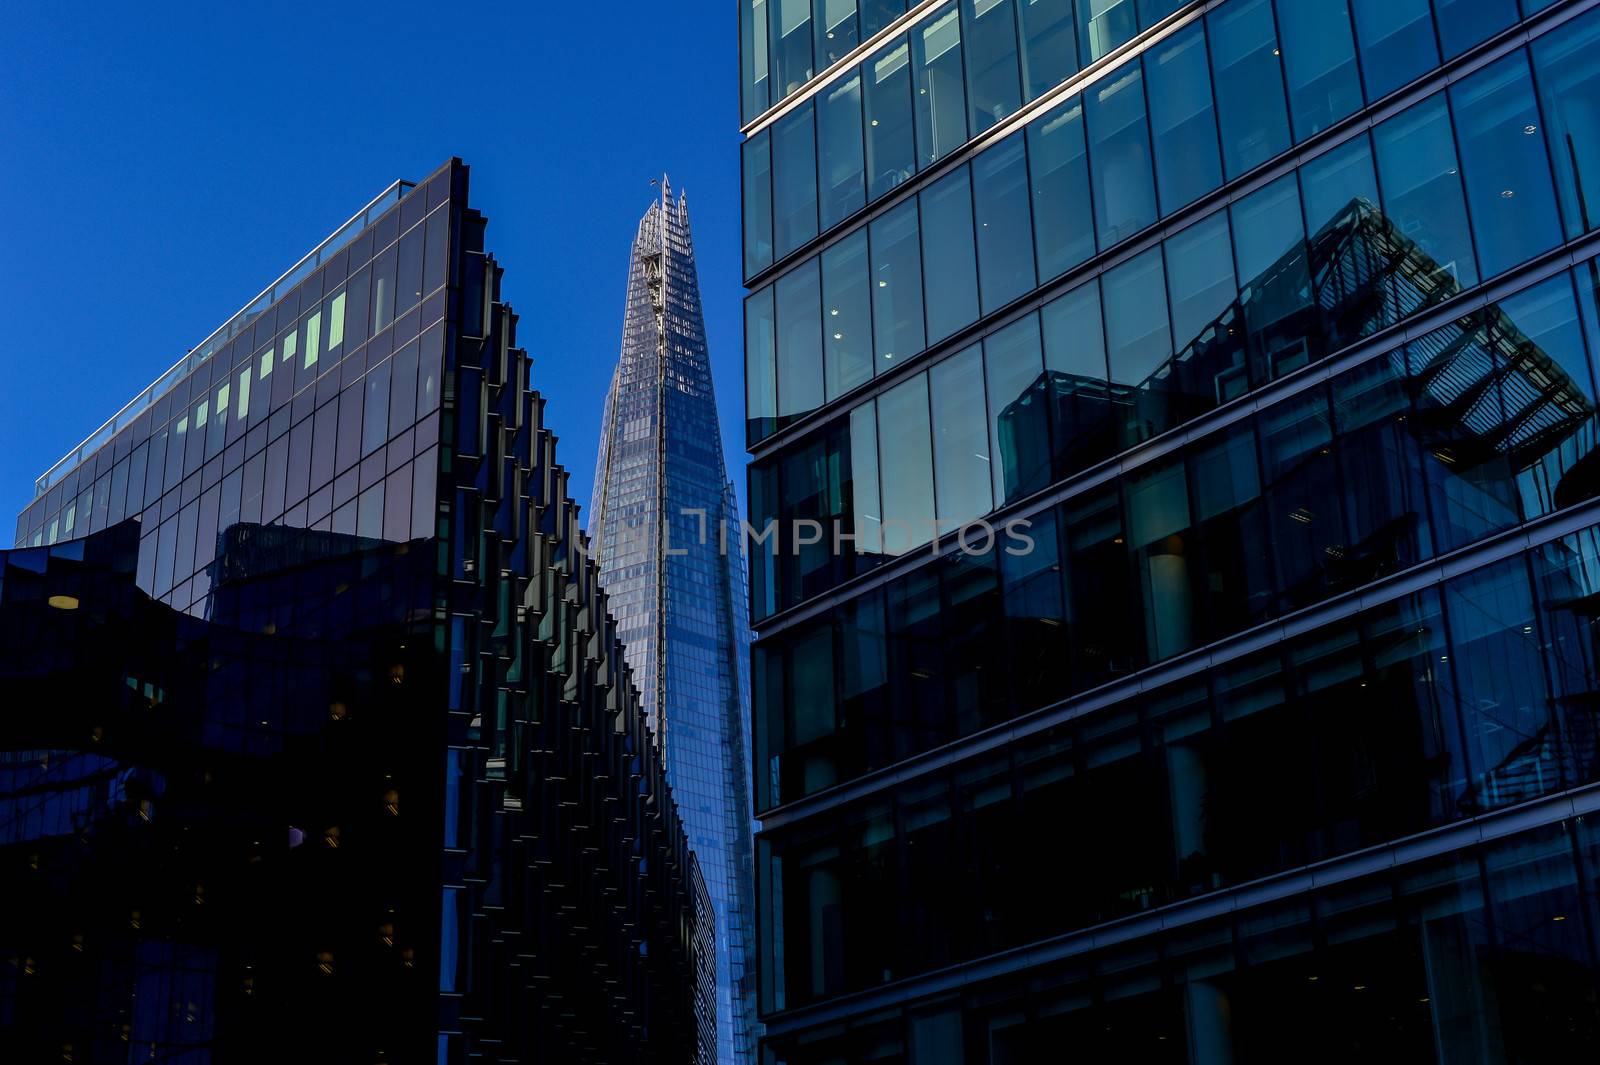 The Shard, Skyscraper in London, England